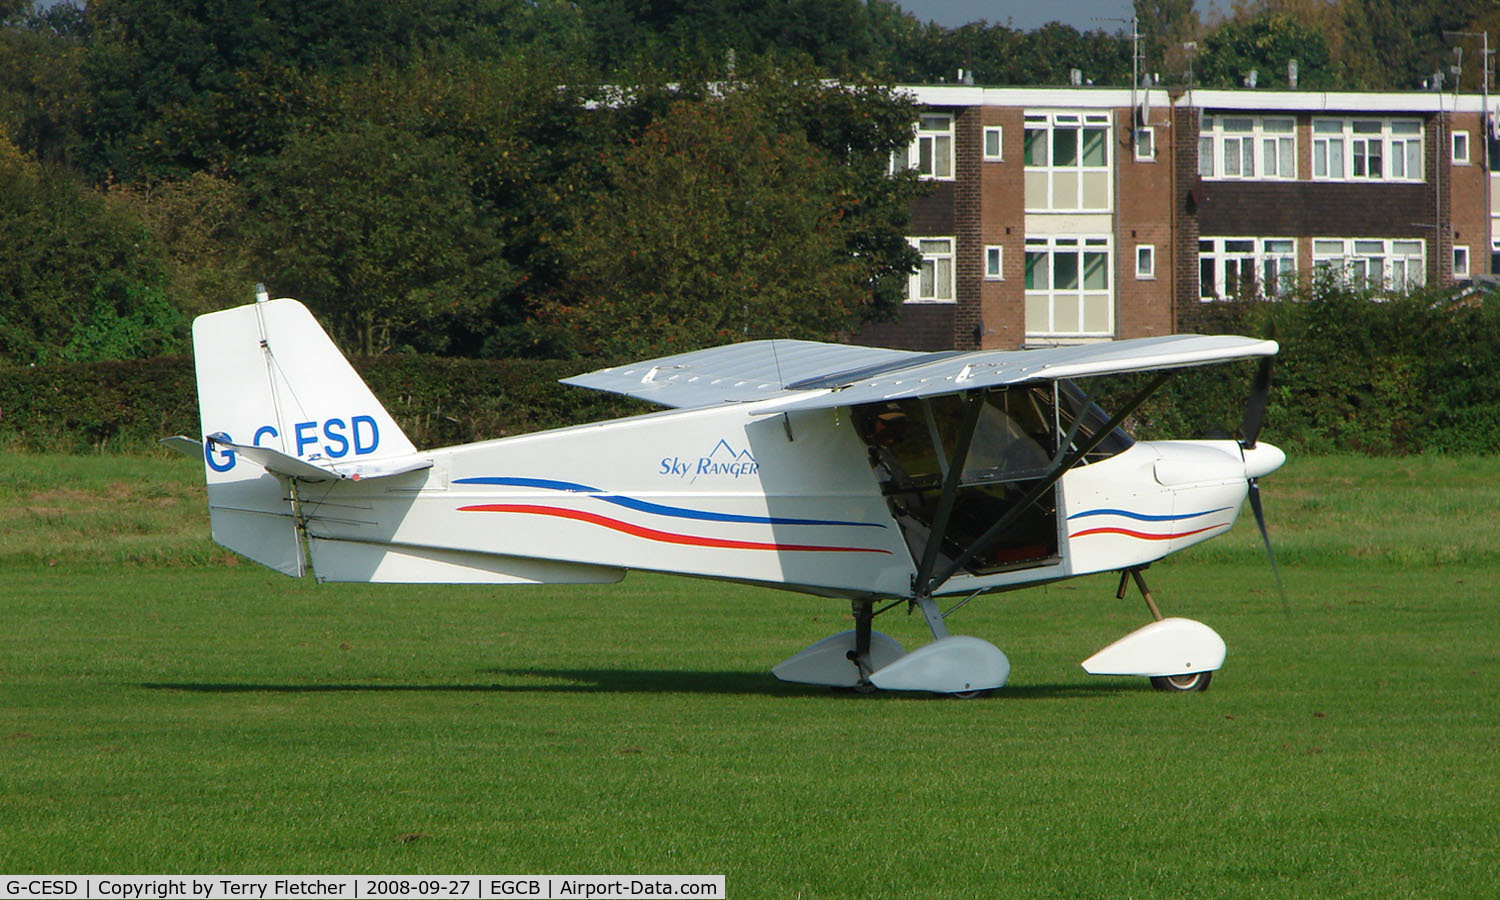 G-CESD, 2007 Best Off Skyranger Swift 912S(1) C/N BMAA/HB/535, Skyranger Swift 912 photographed at Manchester Barton Open Day in Sept 2008